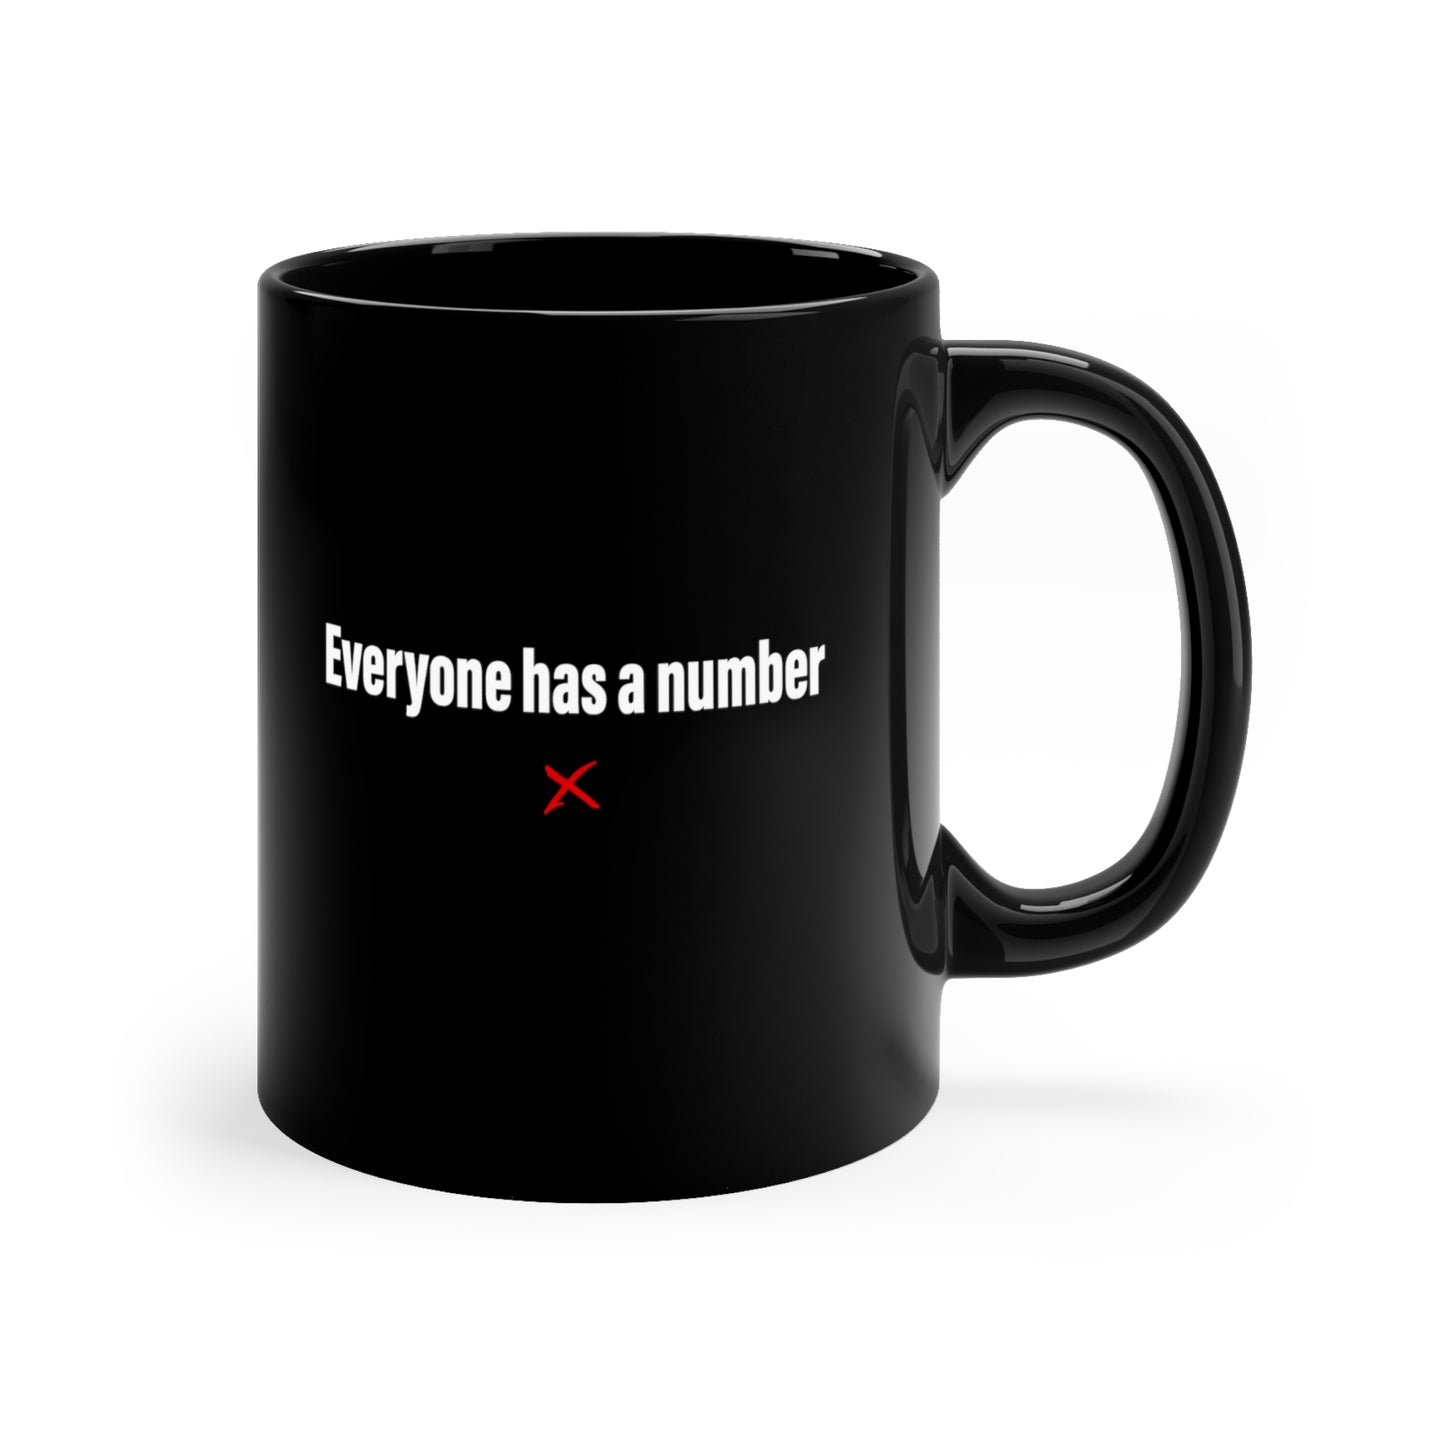 Everyone has a number - Mug